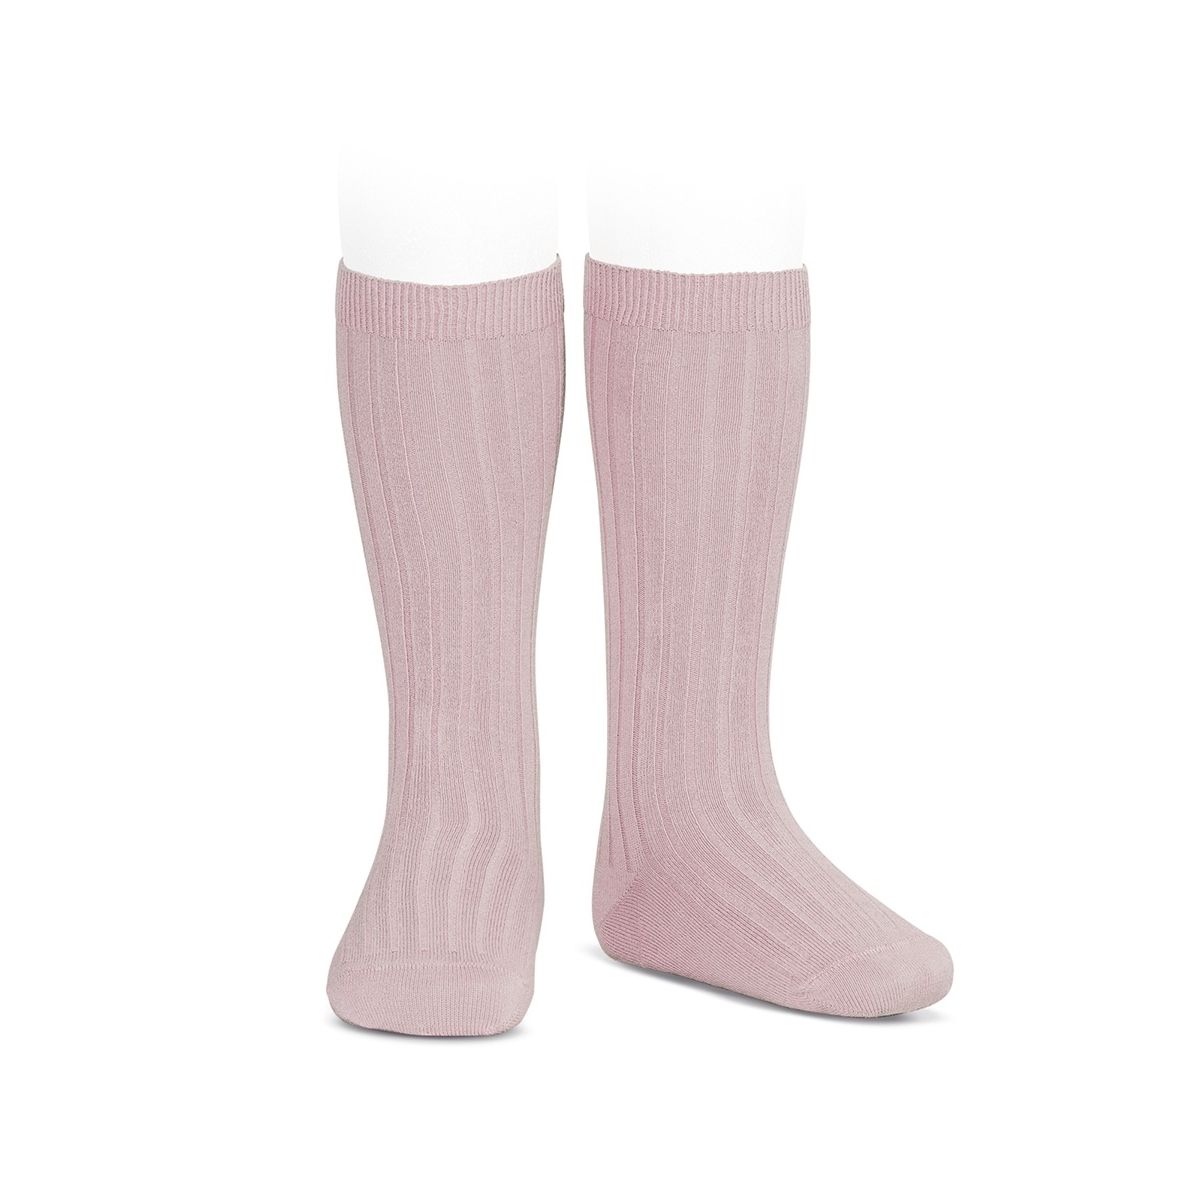 Condor - Wide Ribbed Cotton Knee High Socks pale pink - Medias